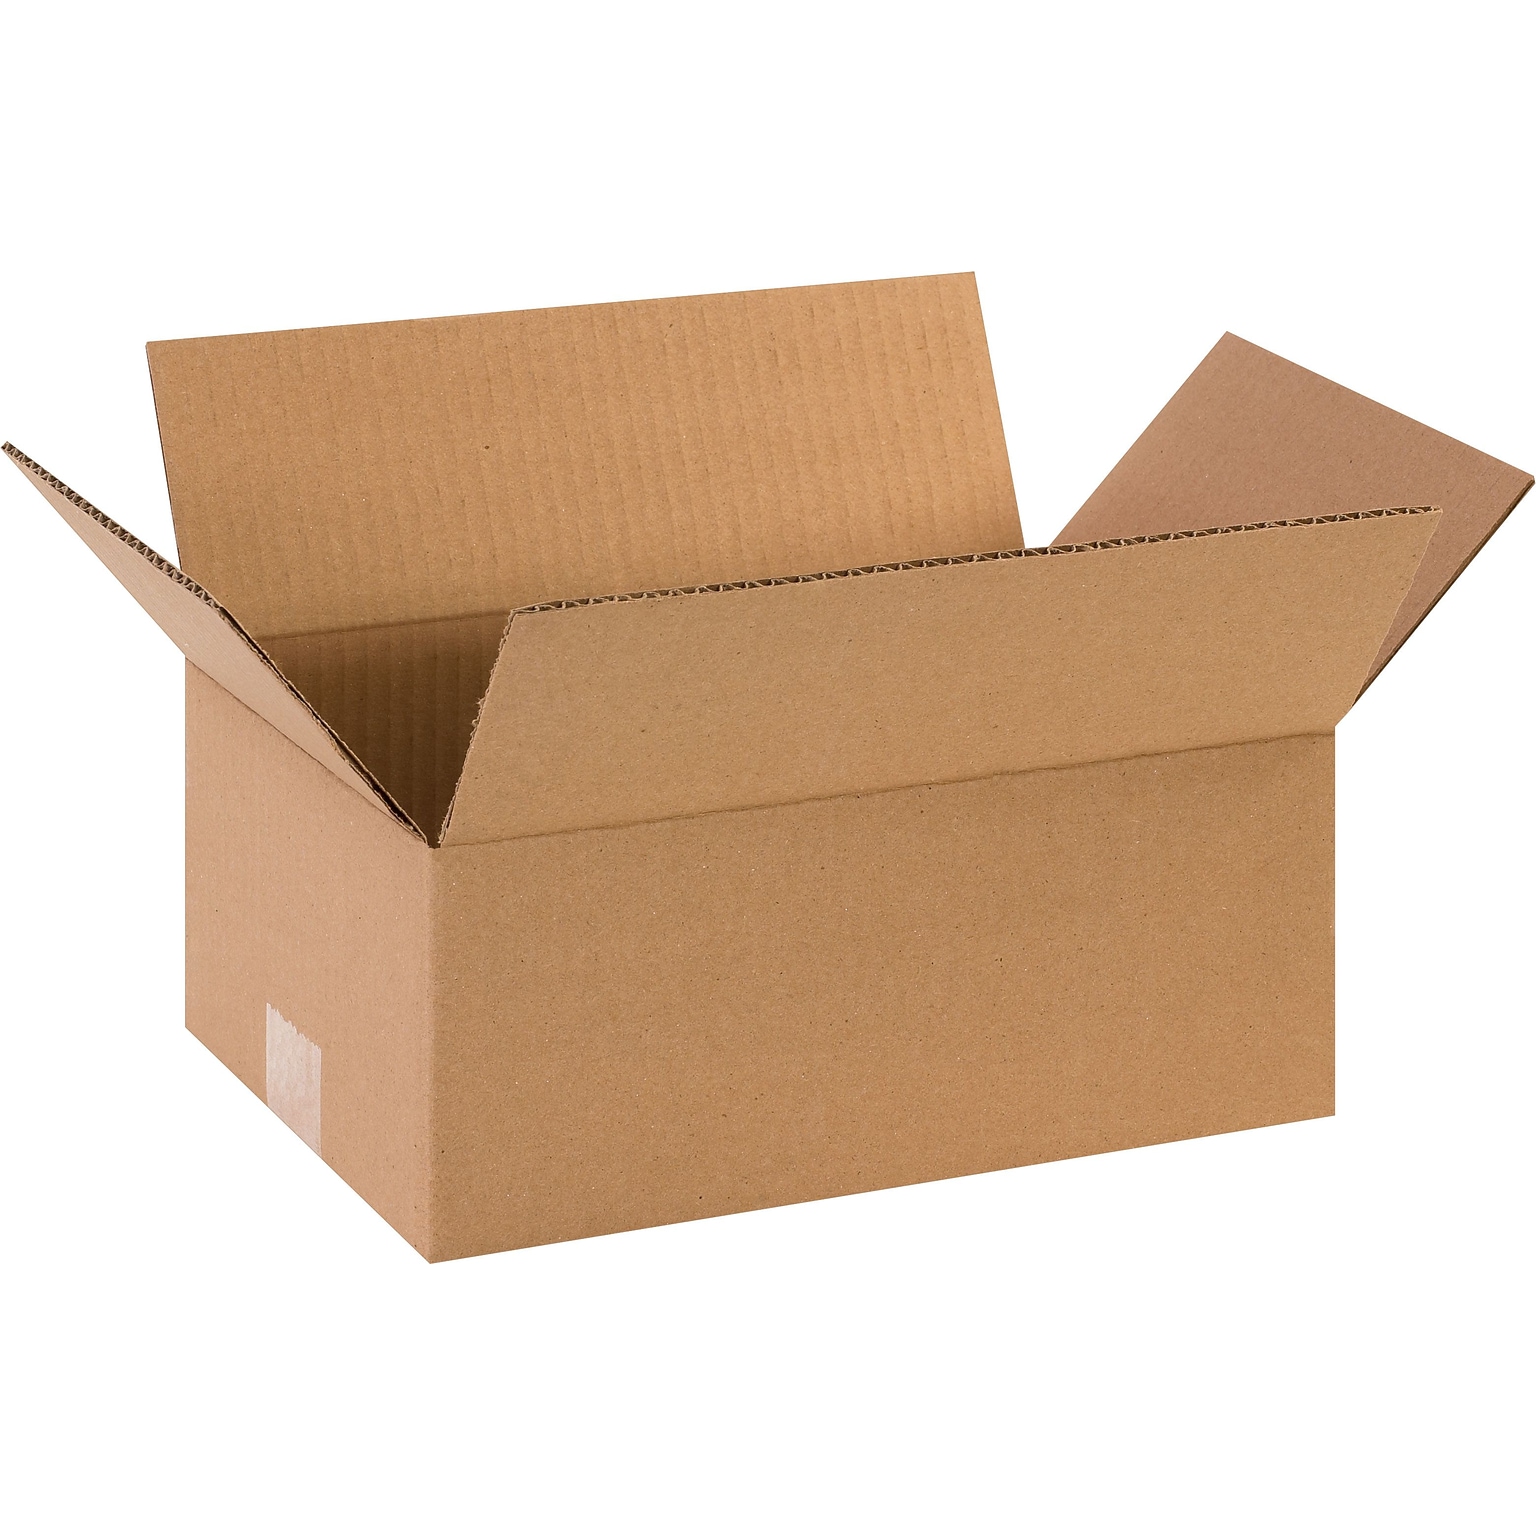 12 x 8 x 5 Shipping Boxes, 32 ECT, Brown, 25/Bundle (1285)